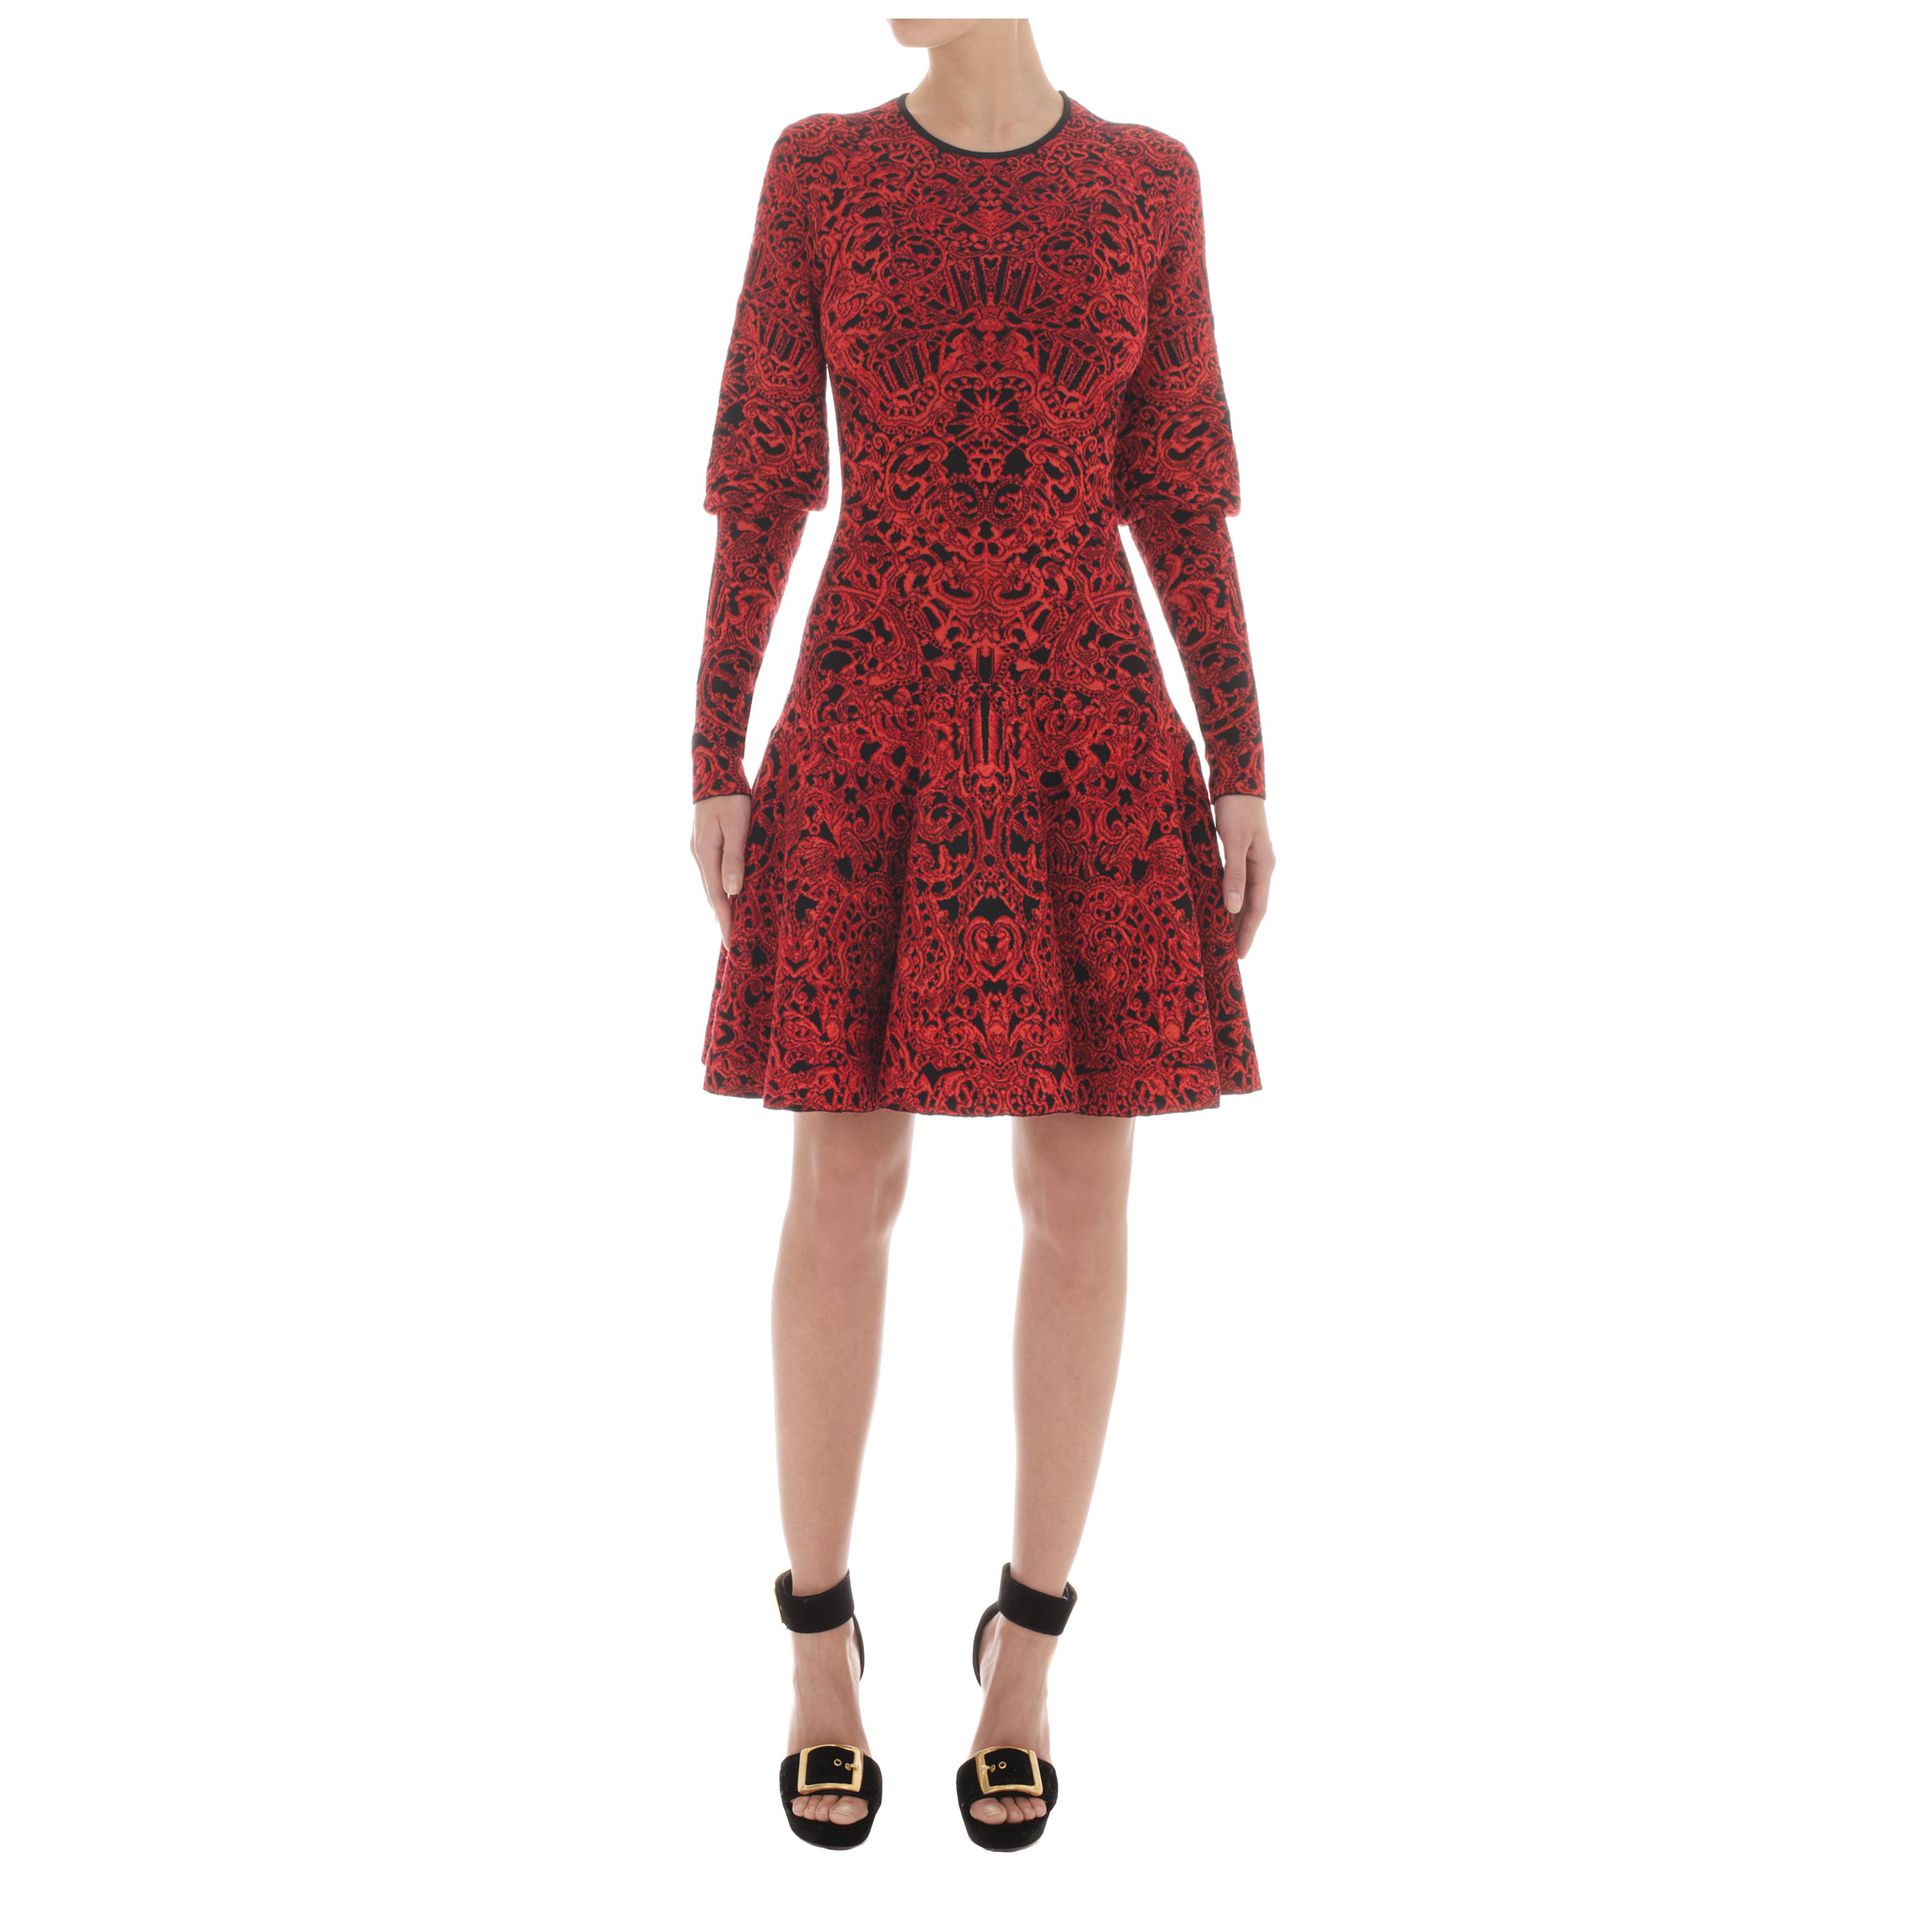 Alexander McQueen Glory Jacquard Knit Dress in Red - Lyst